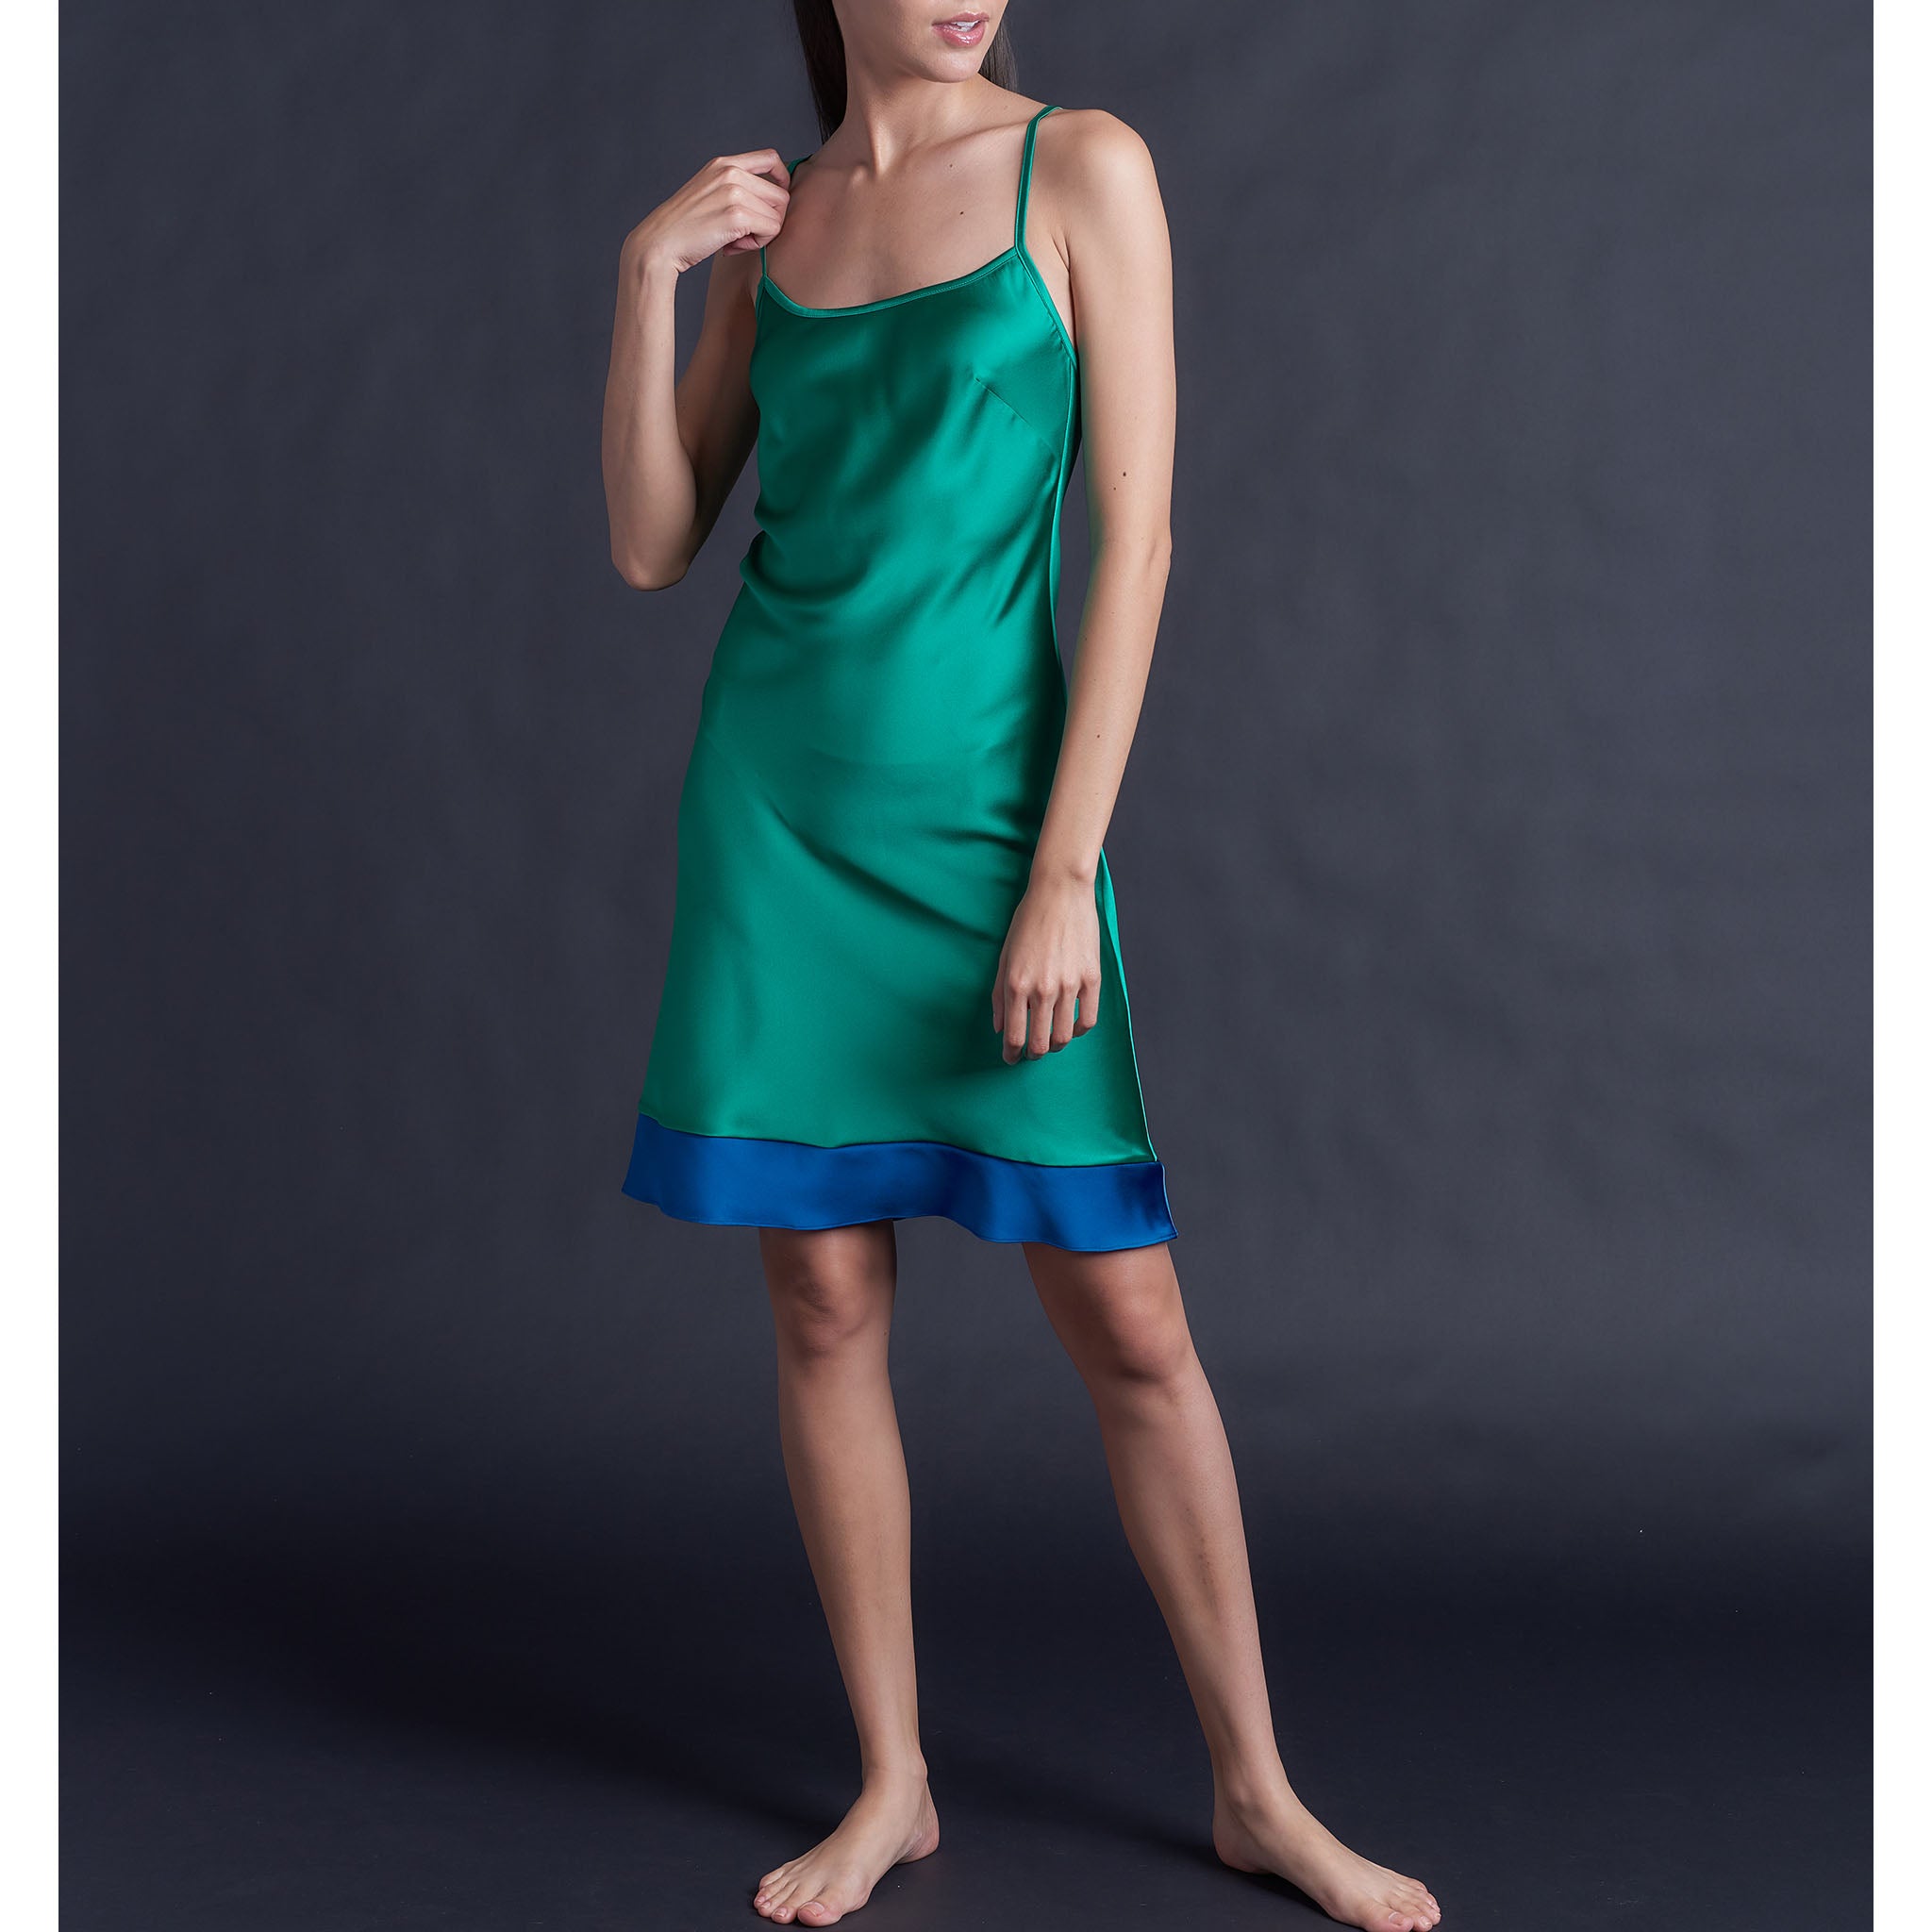 Athena Mid Length Slip Dress in Color Block Emerald & Tanzanite Silk Charmeuse